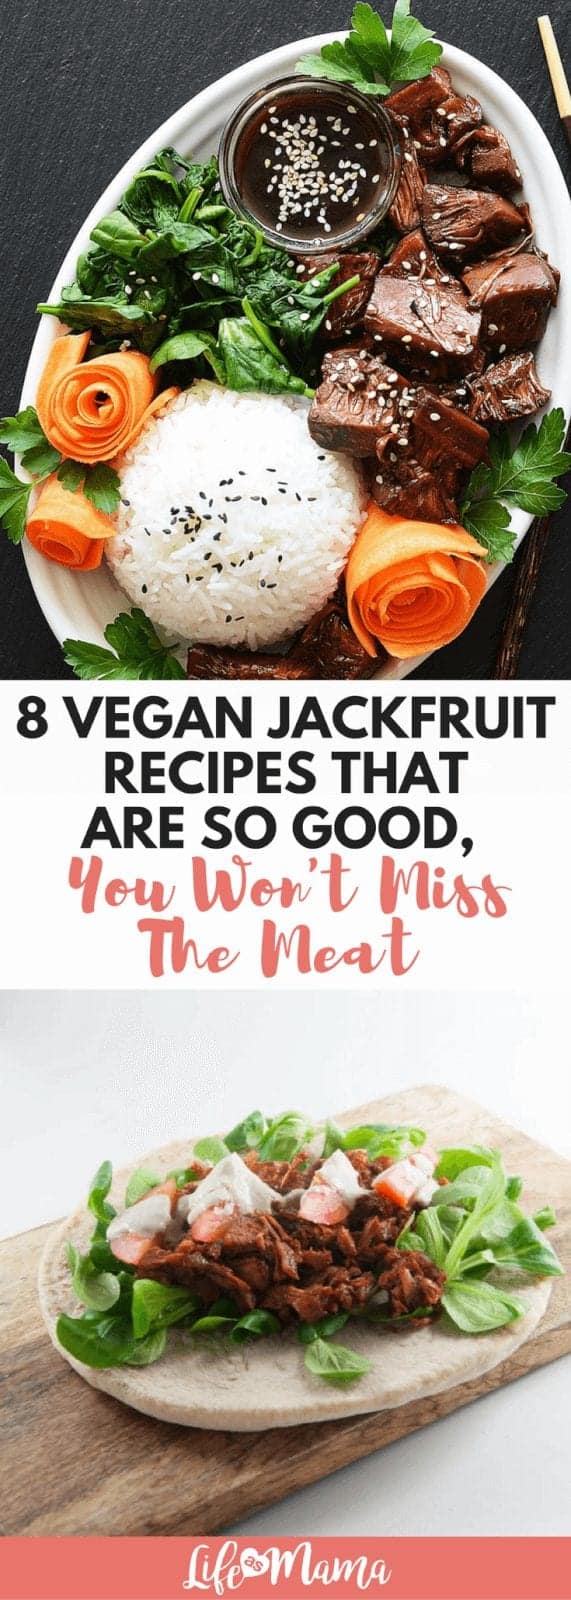 jackfruit recipes